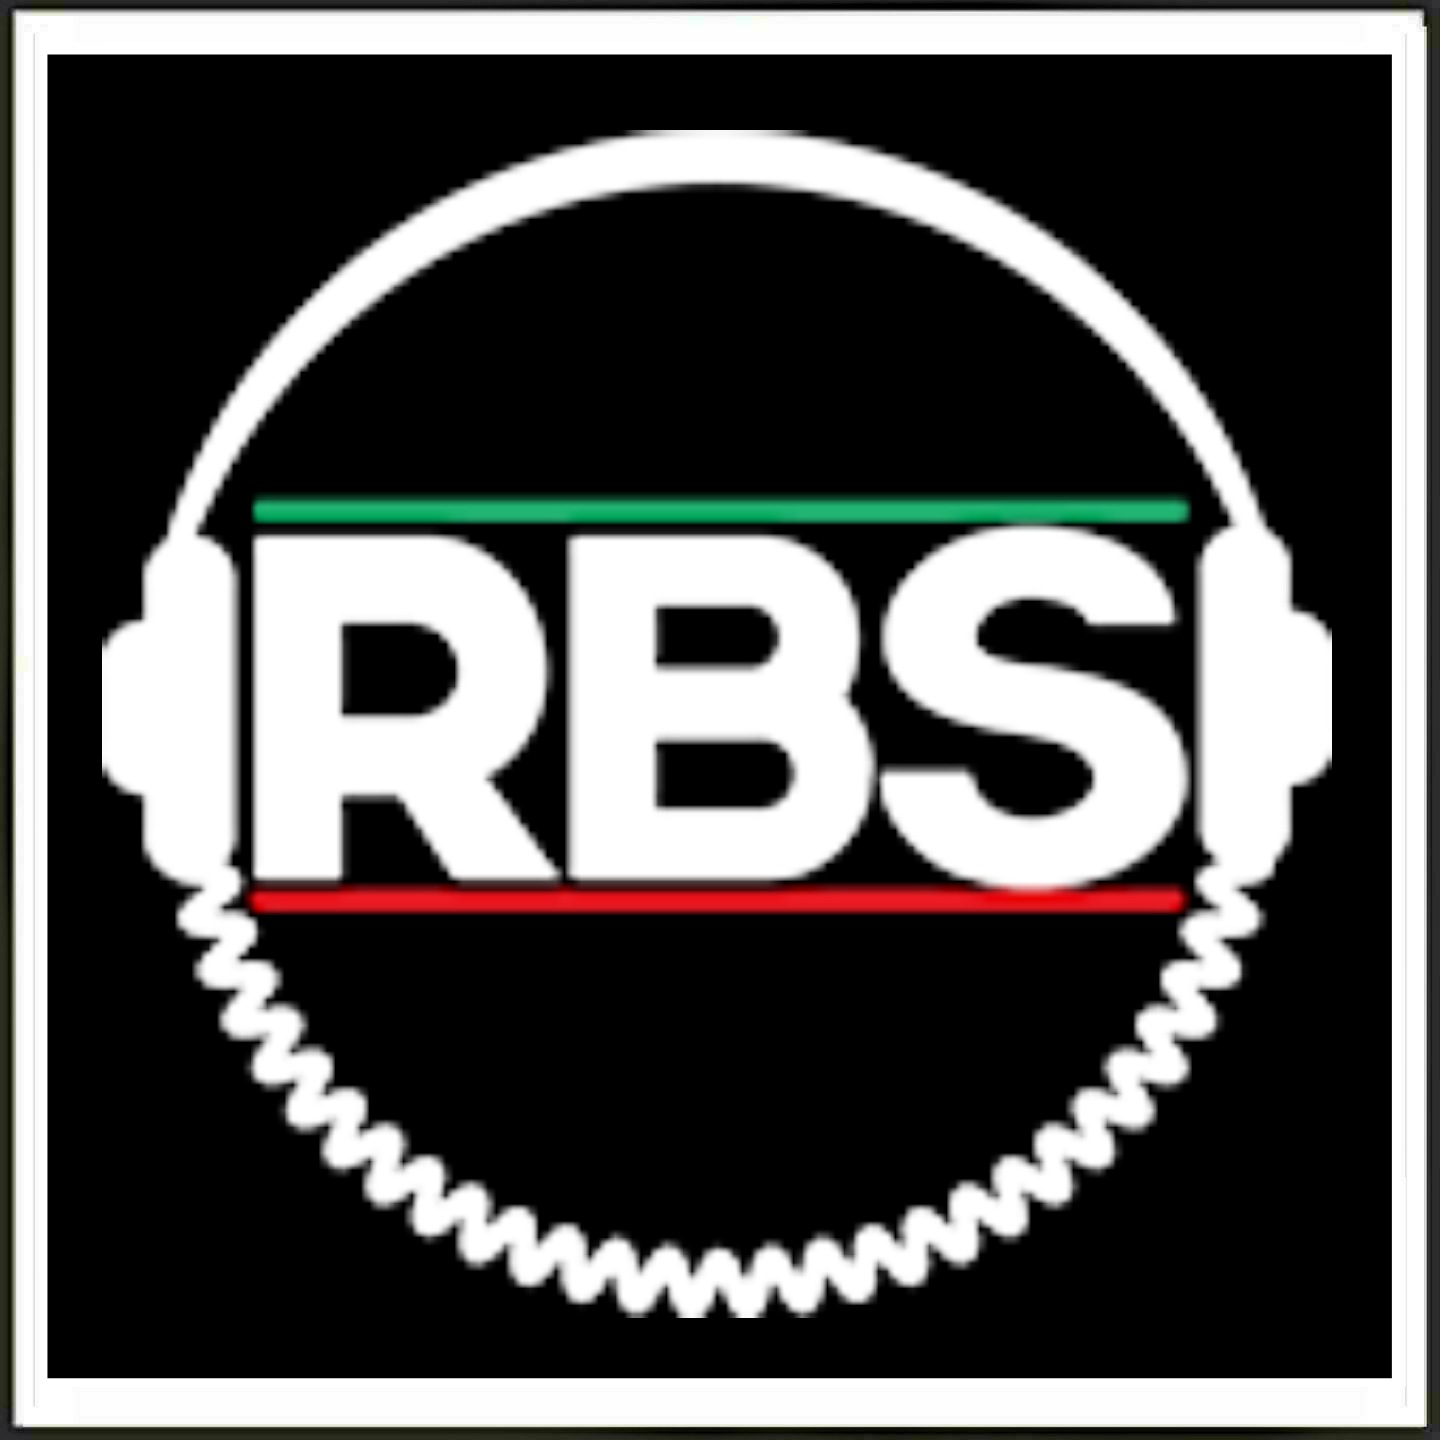 RADIO RBS